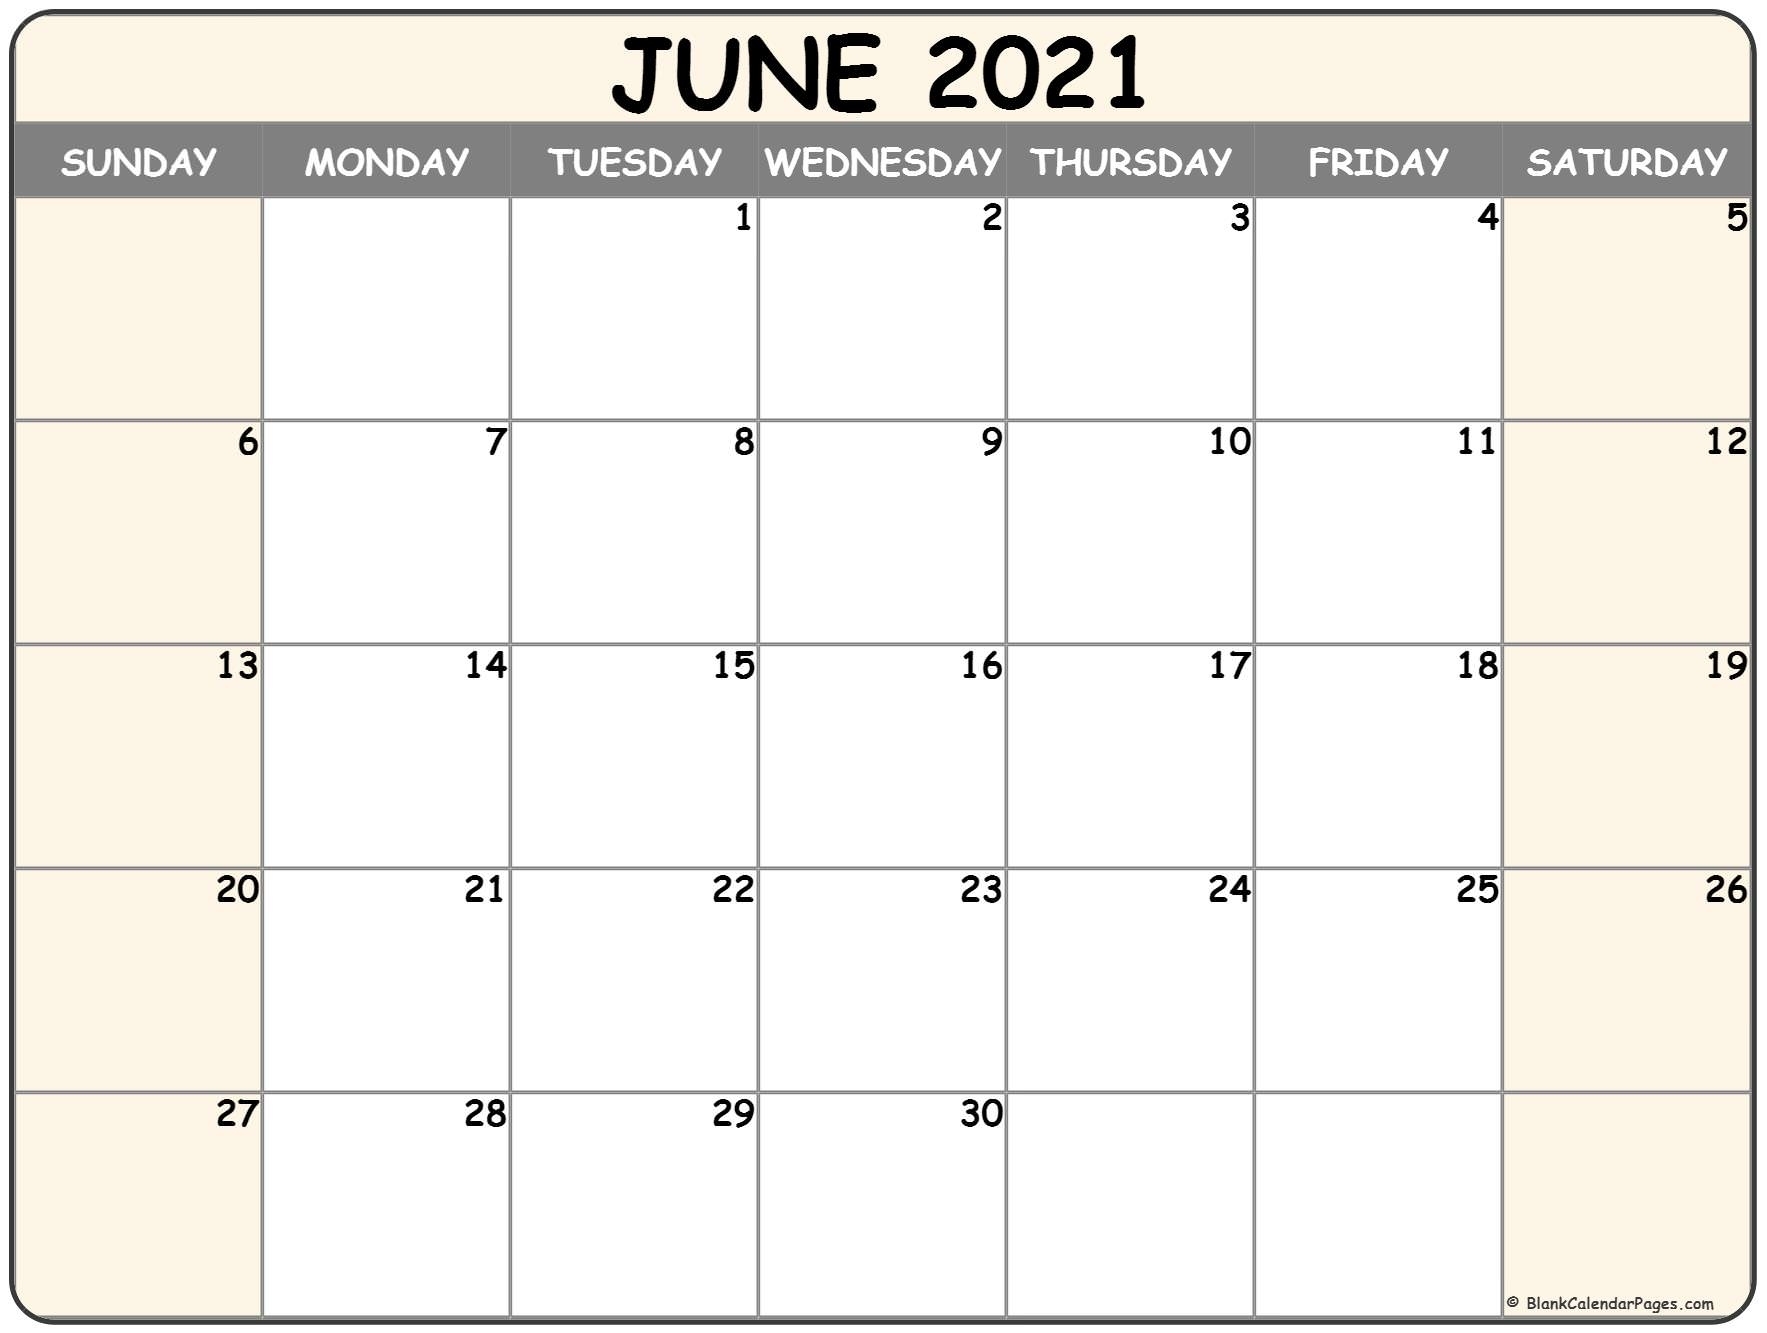 June 2021 Calendar | Free Printable Calendar Printable June 2021 Calendar